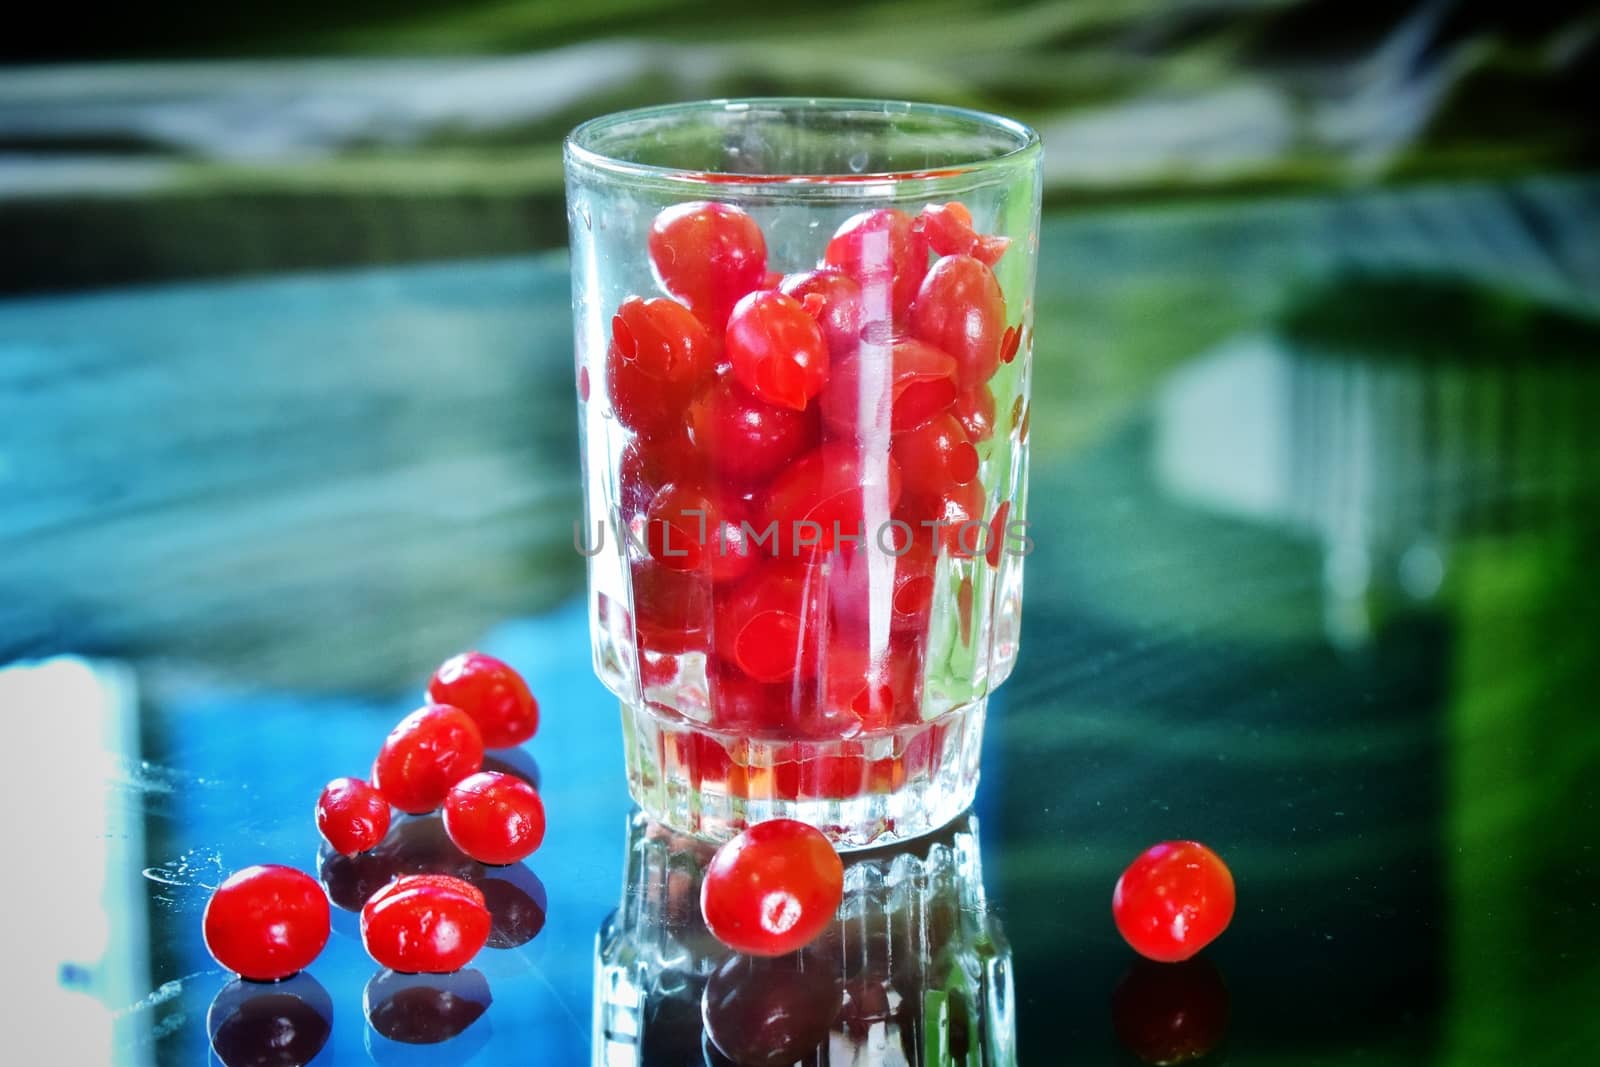 A glass full of cherry fruits by kundanmondal1999